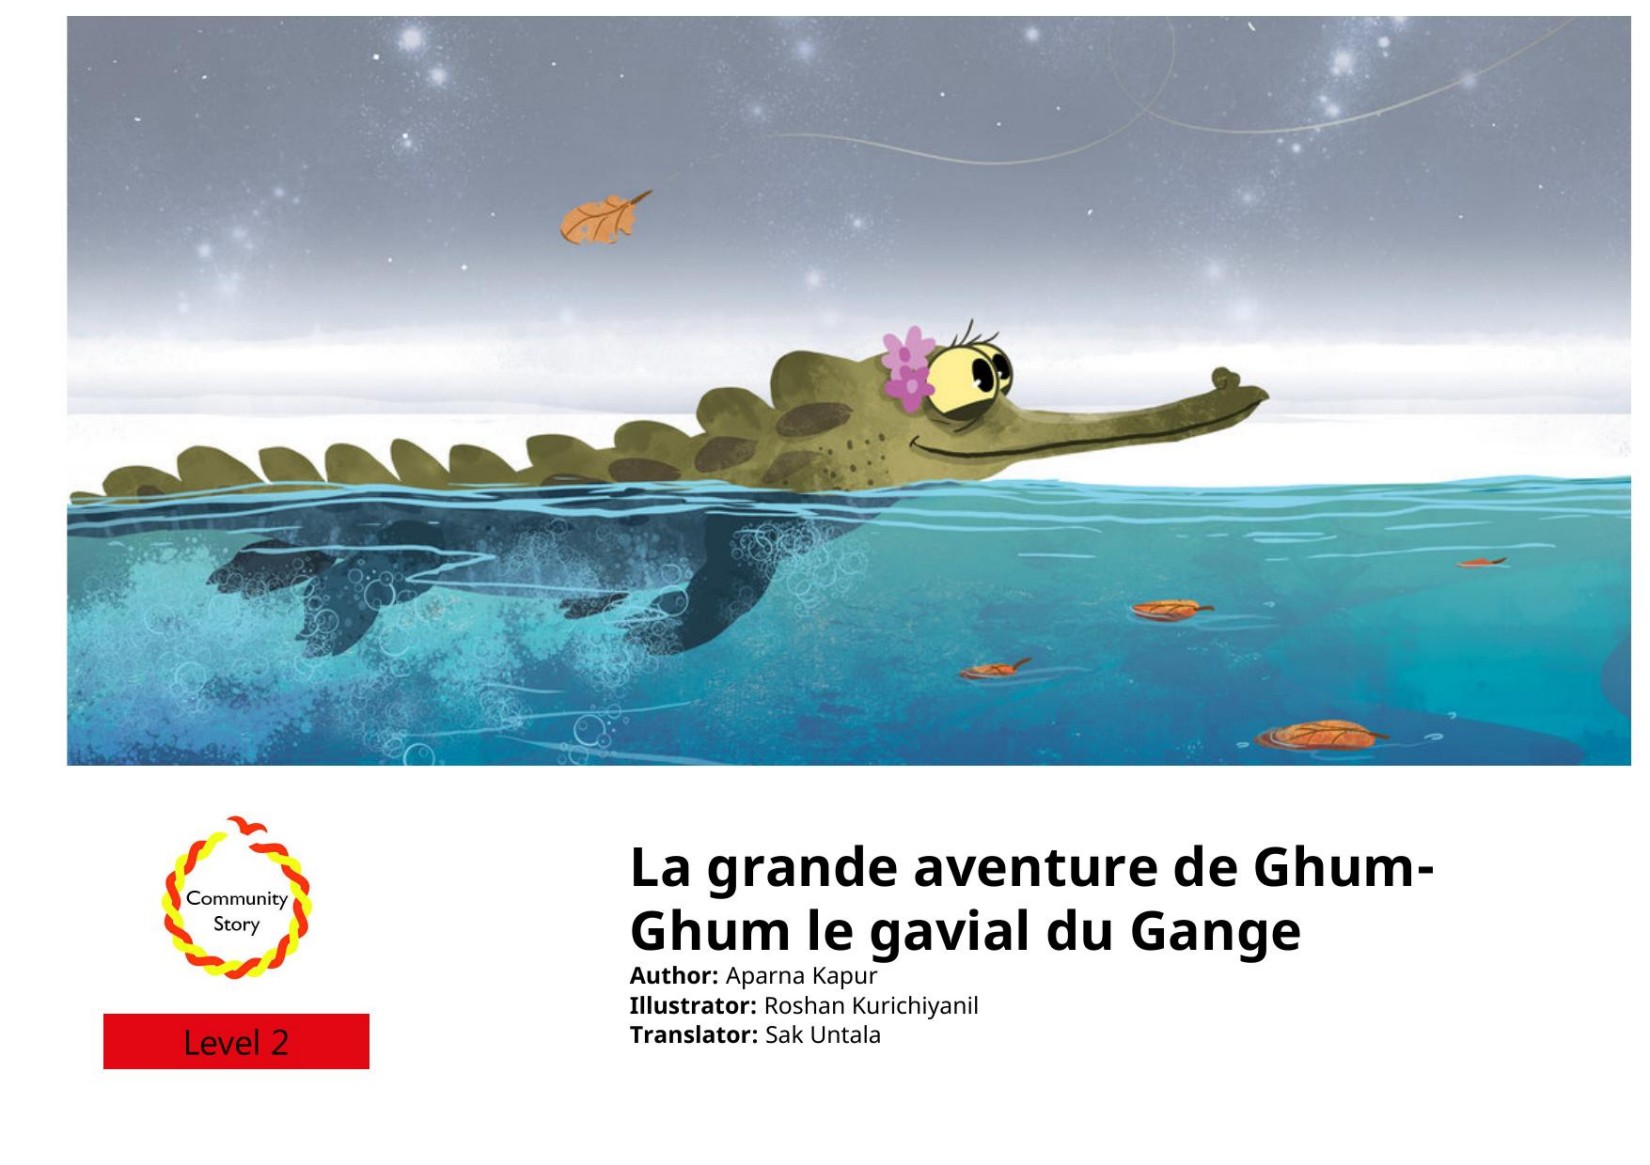 La Grande aventure de Ghum-Ghum le gavial du Gange